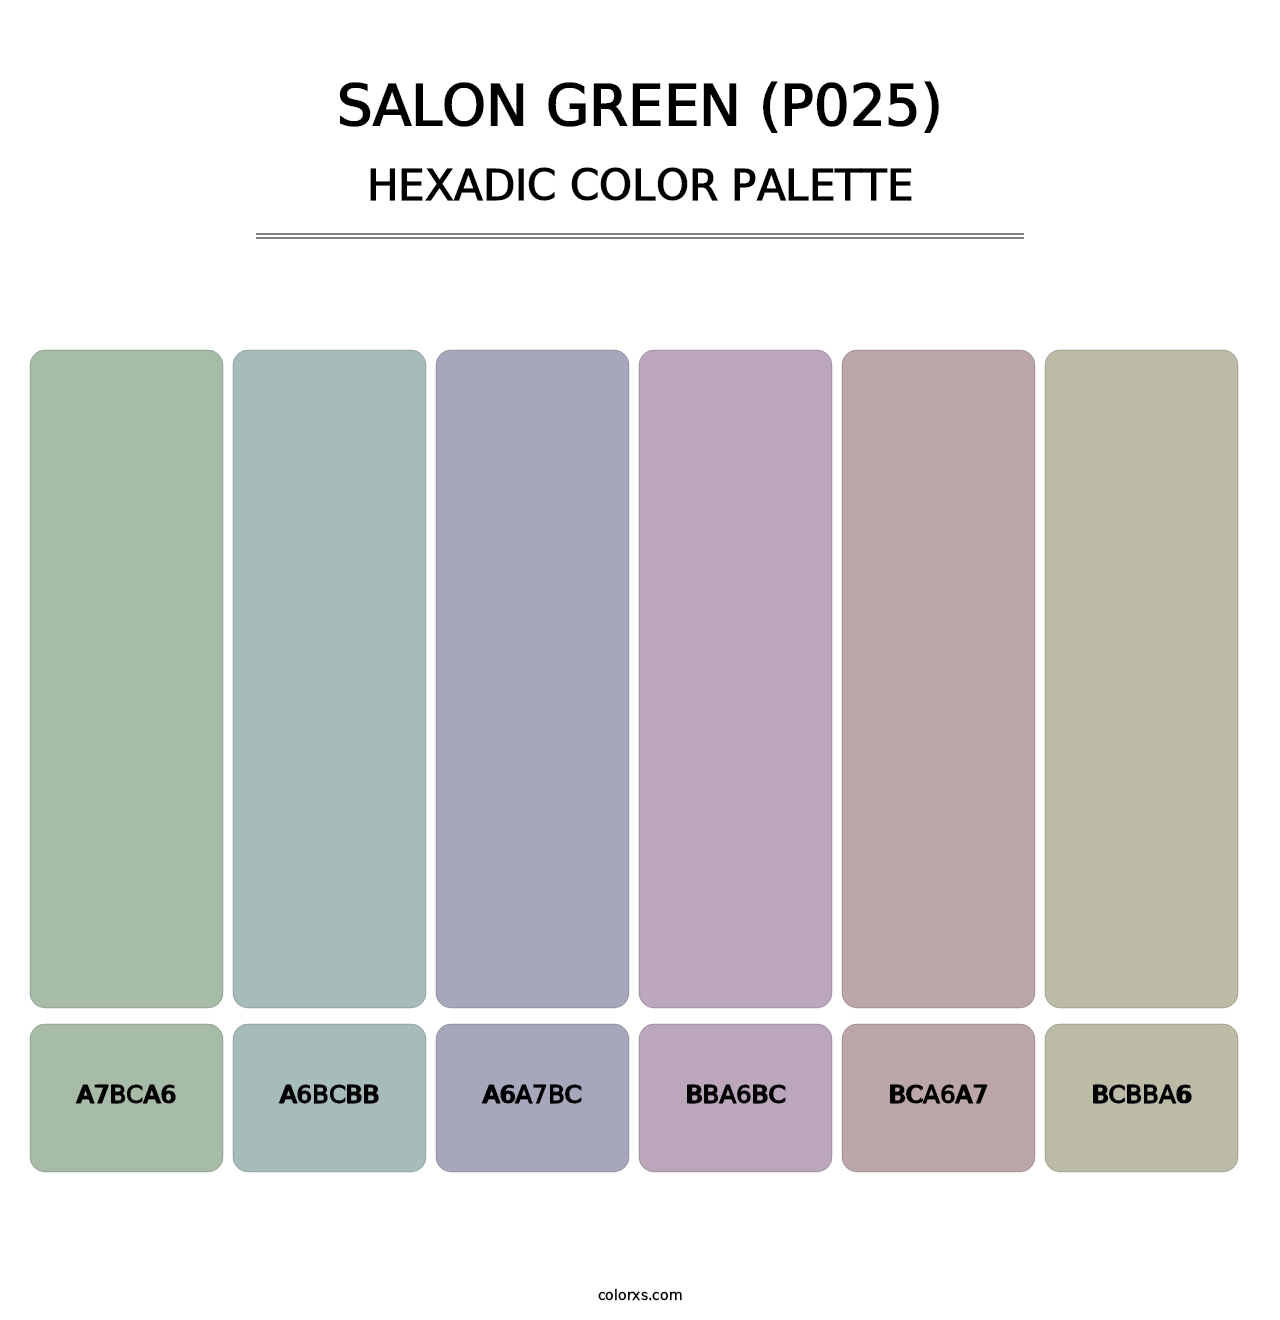 Salon Green (P025) - Hexadic Color Palette